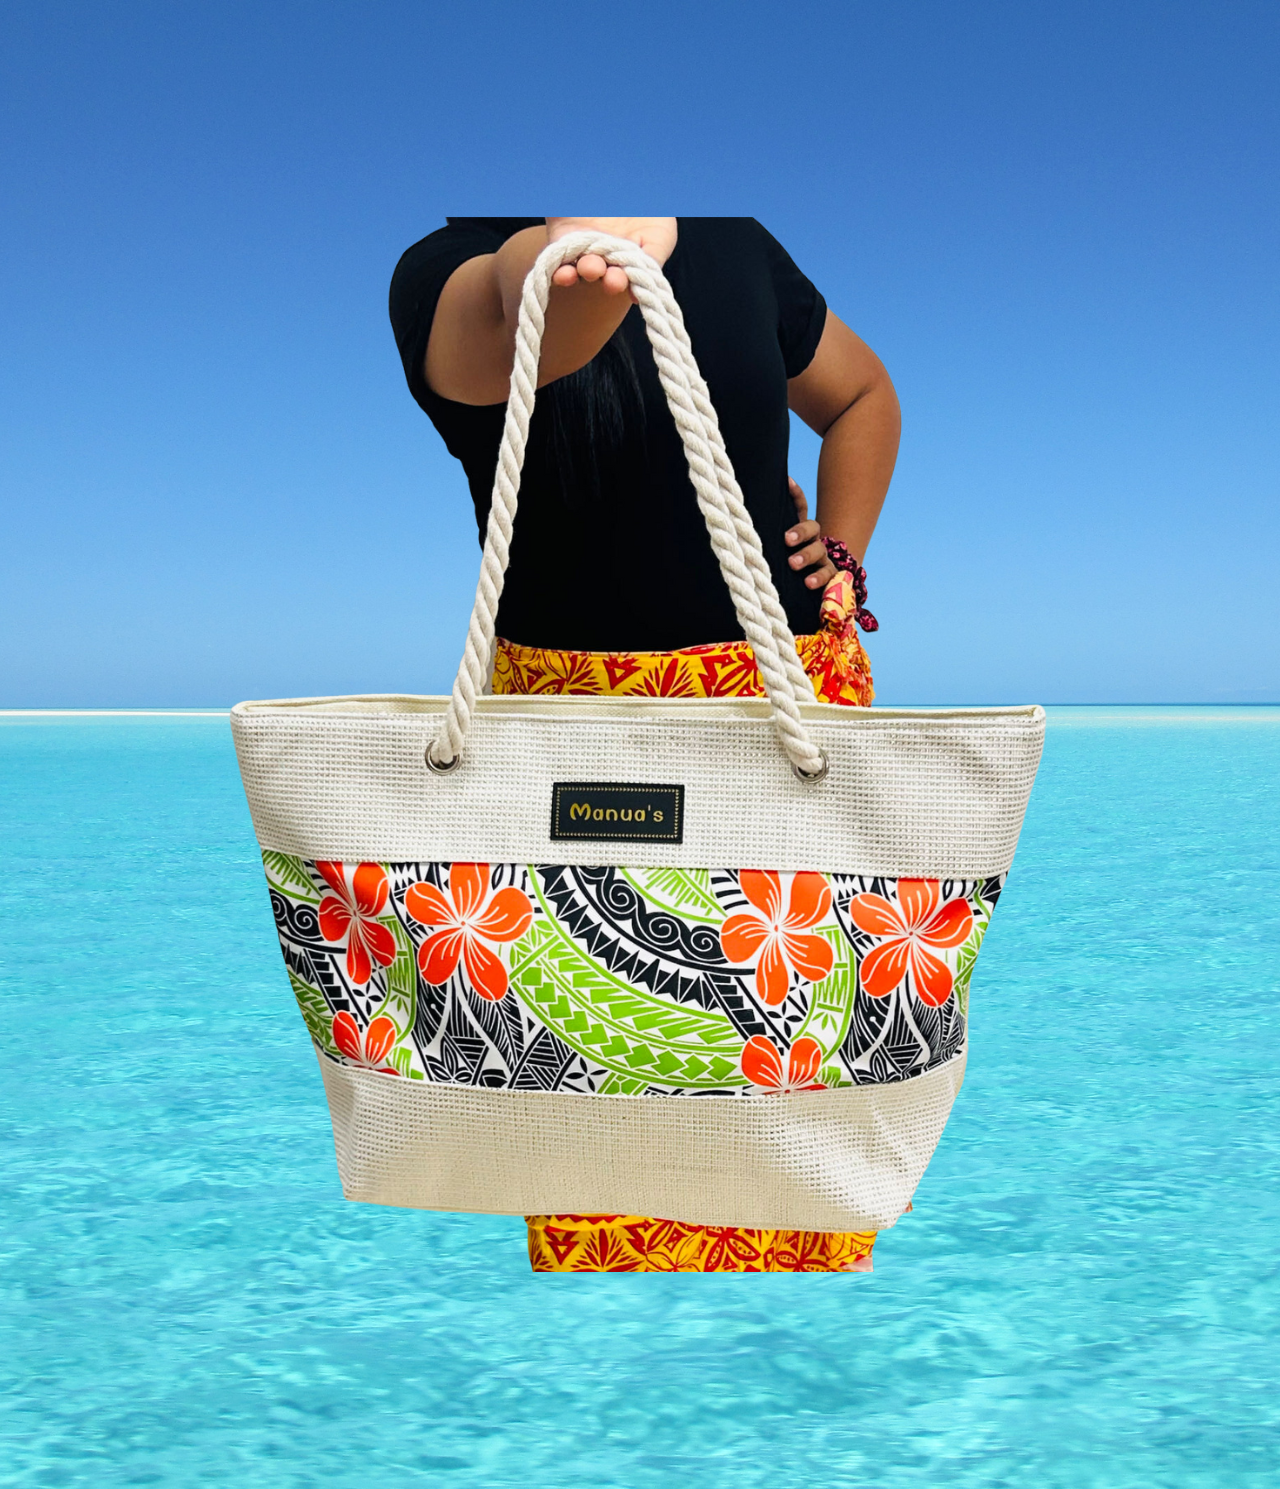 Samoan Design Tote Bag - Neon Green & Orange